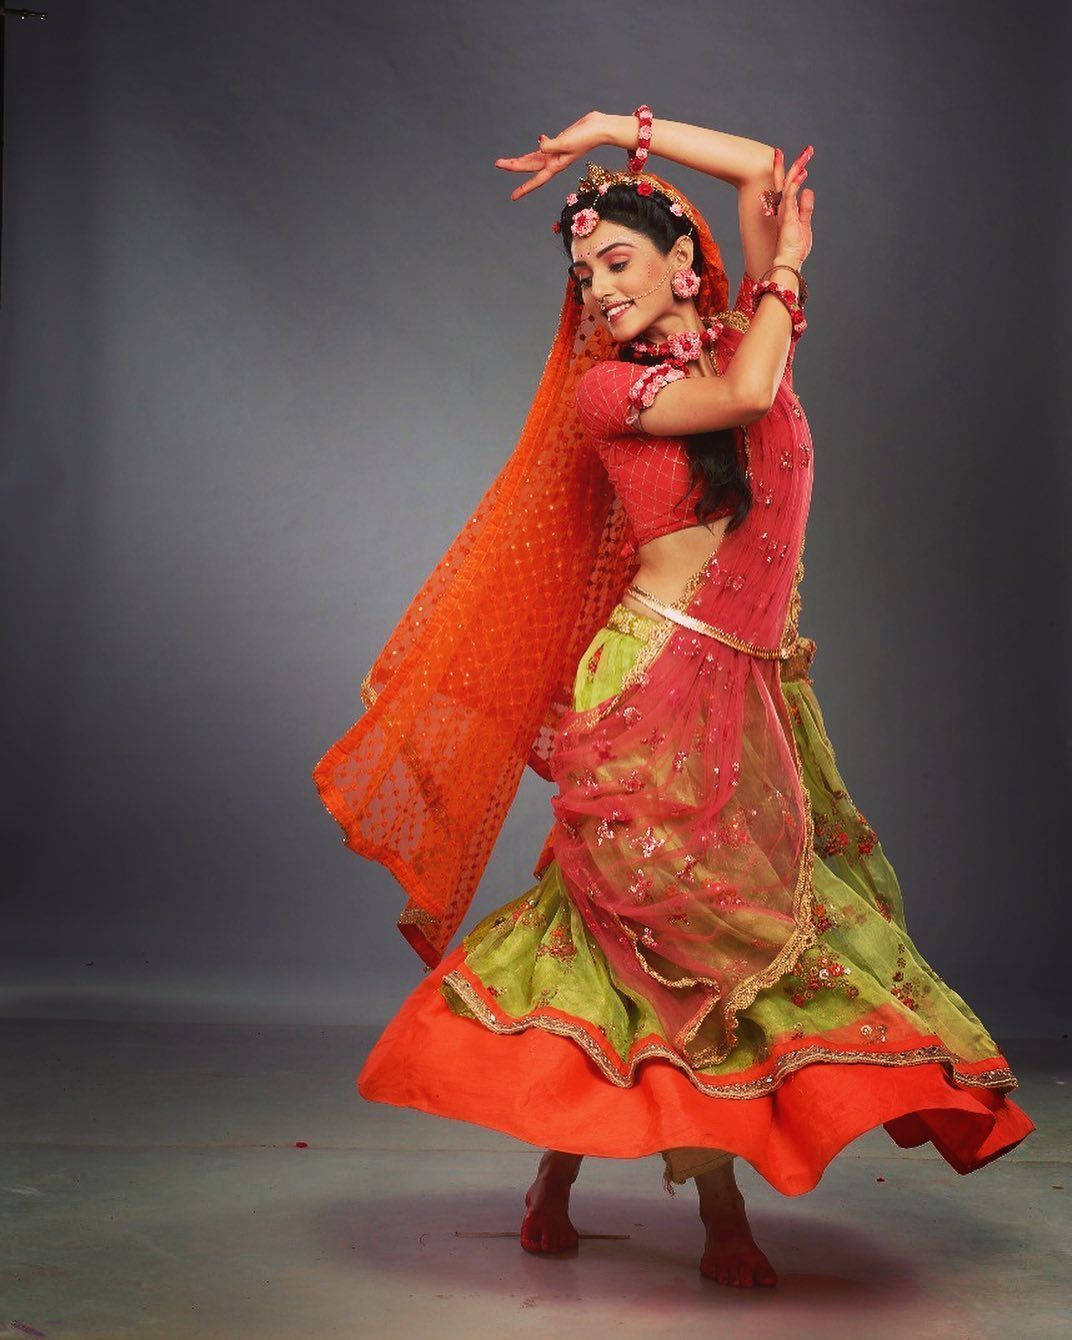 Mallika Singh Red Dress Dancing Wallpaper